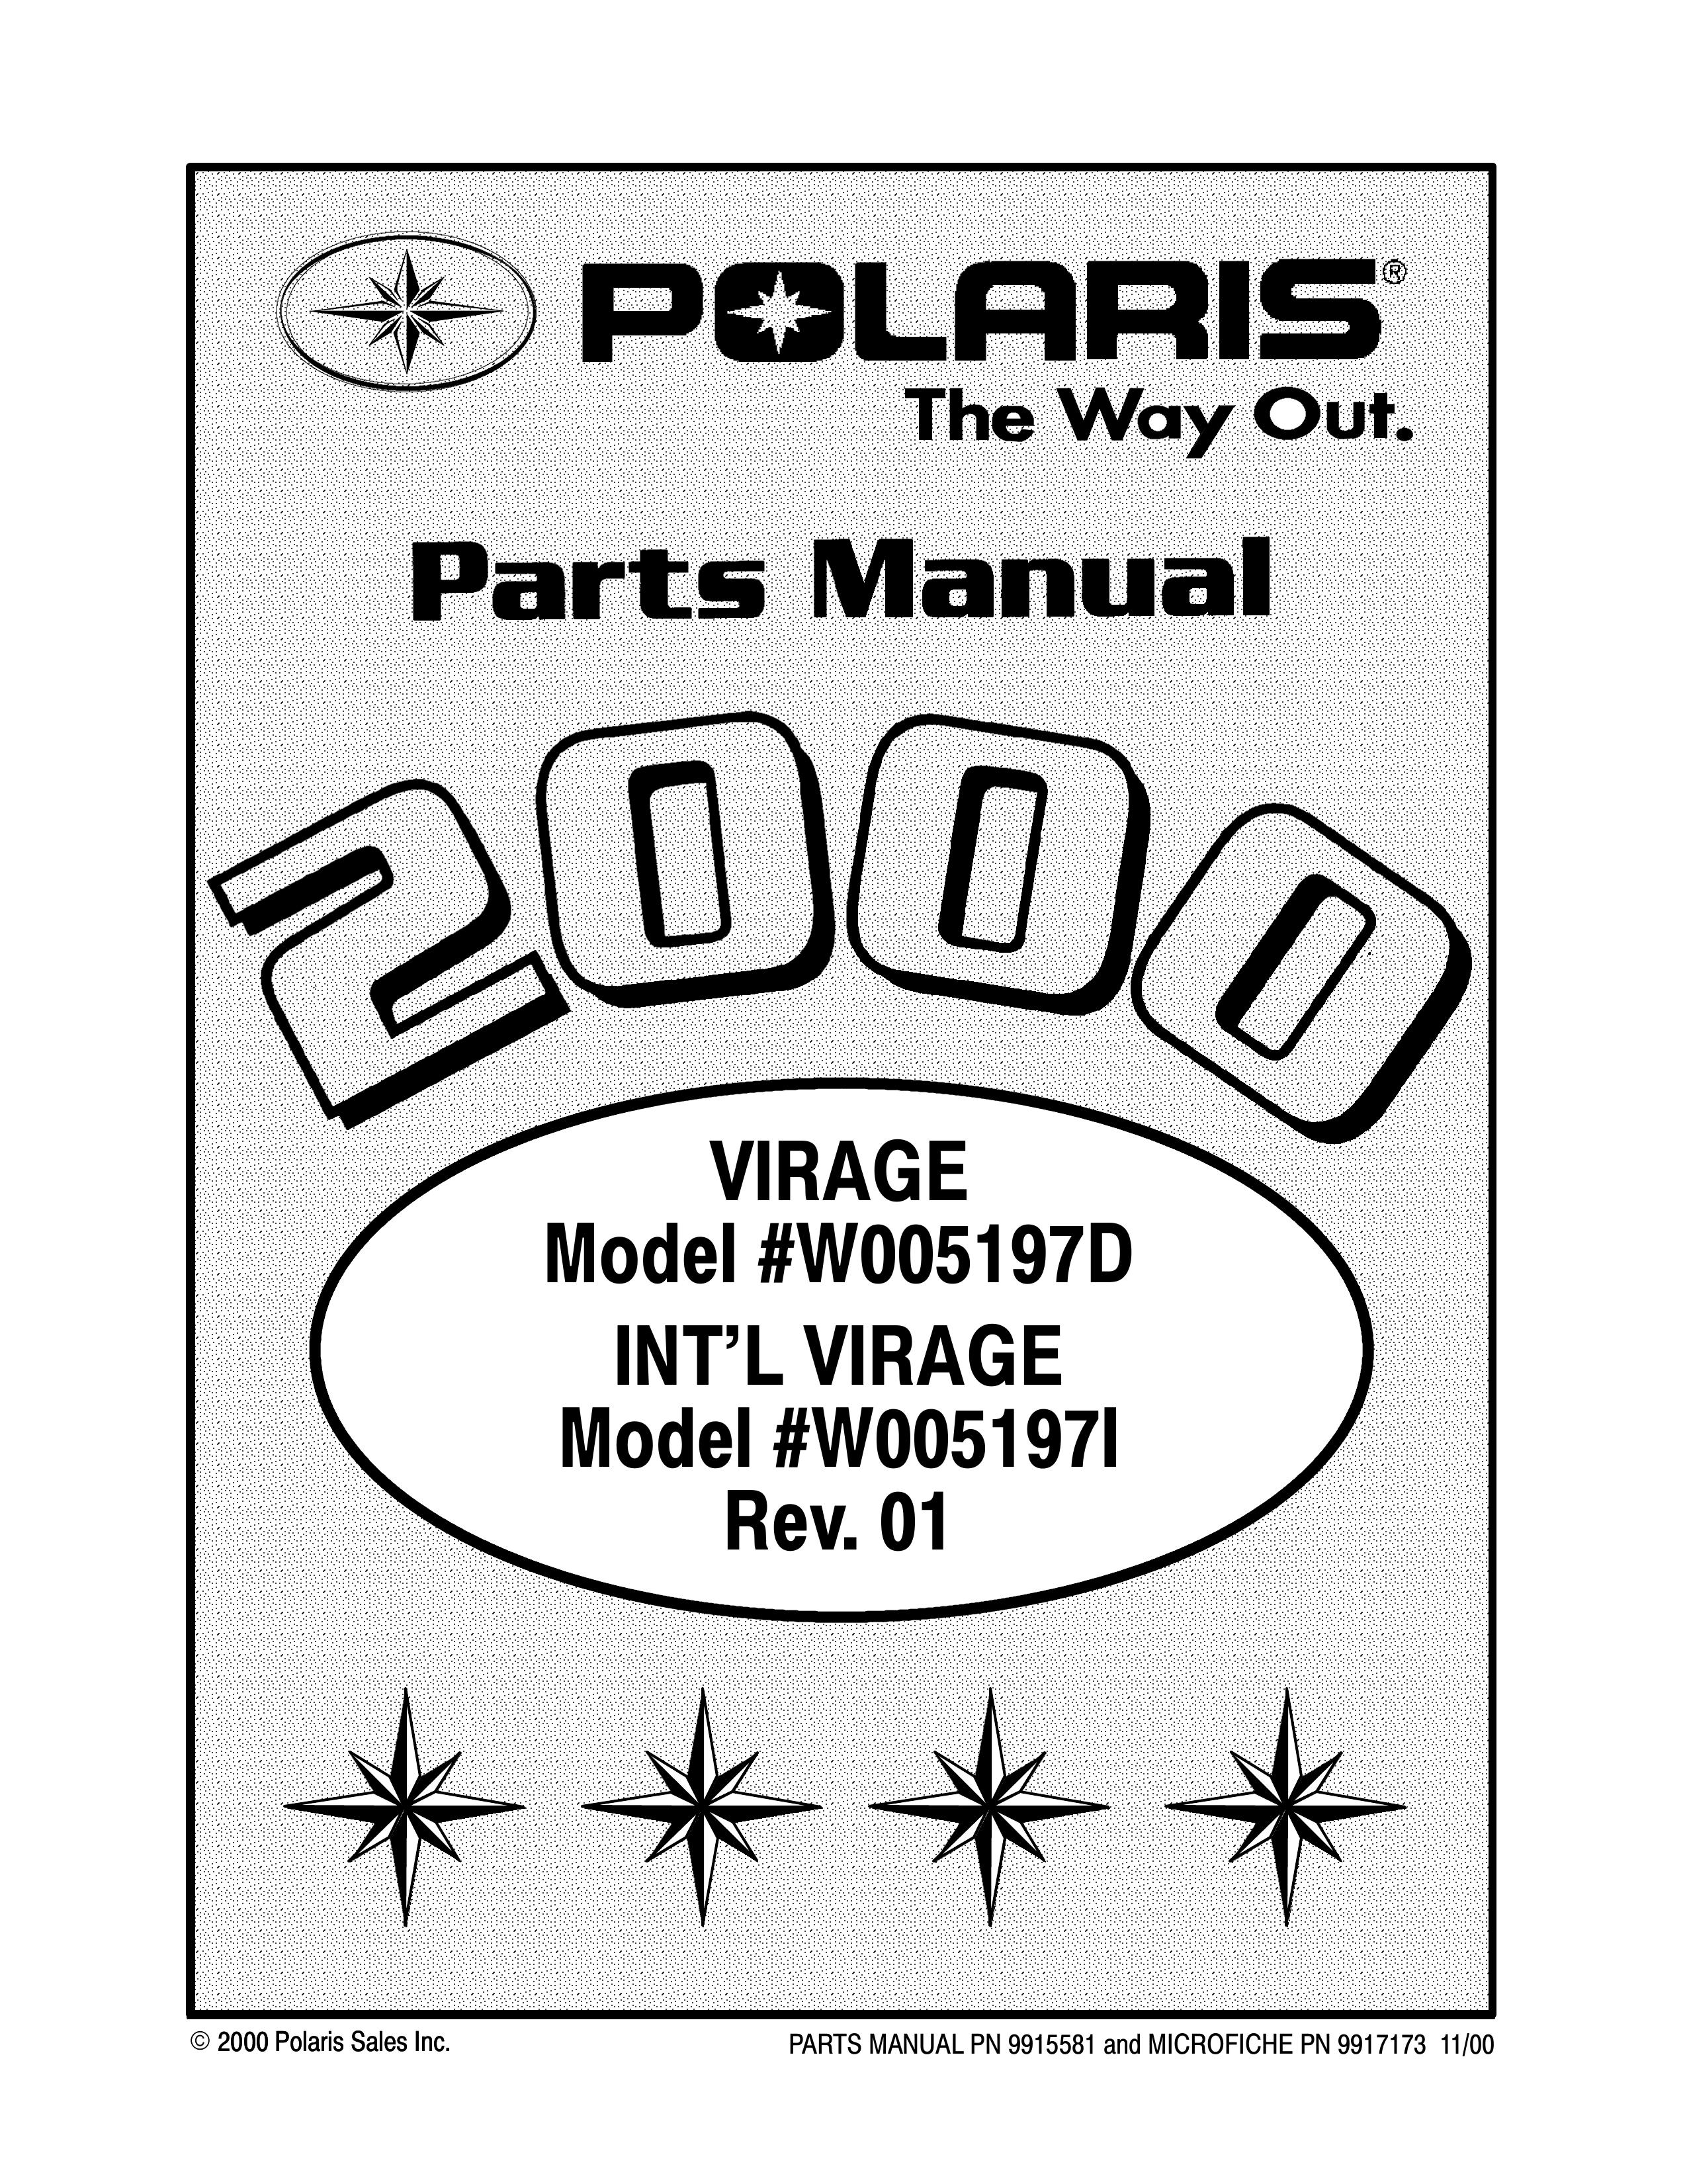 Polaris W005197D Jet Ski User Manual